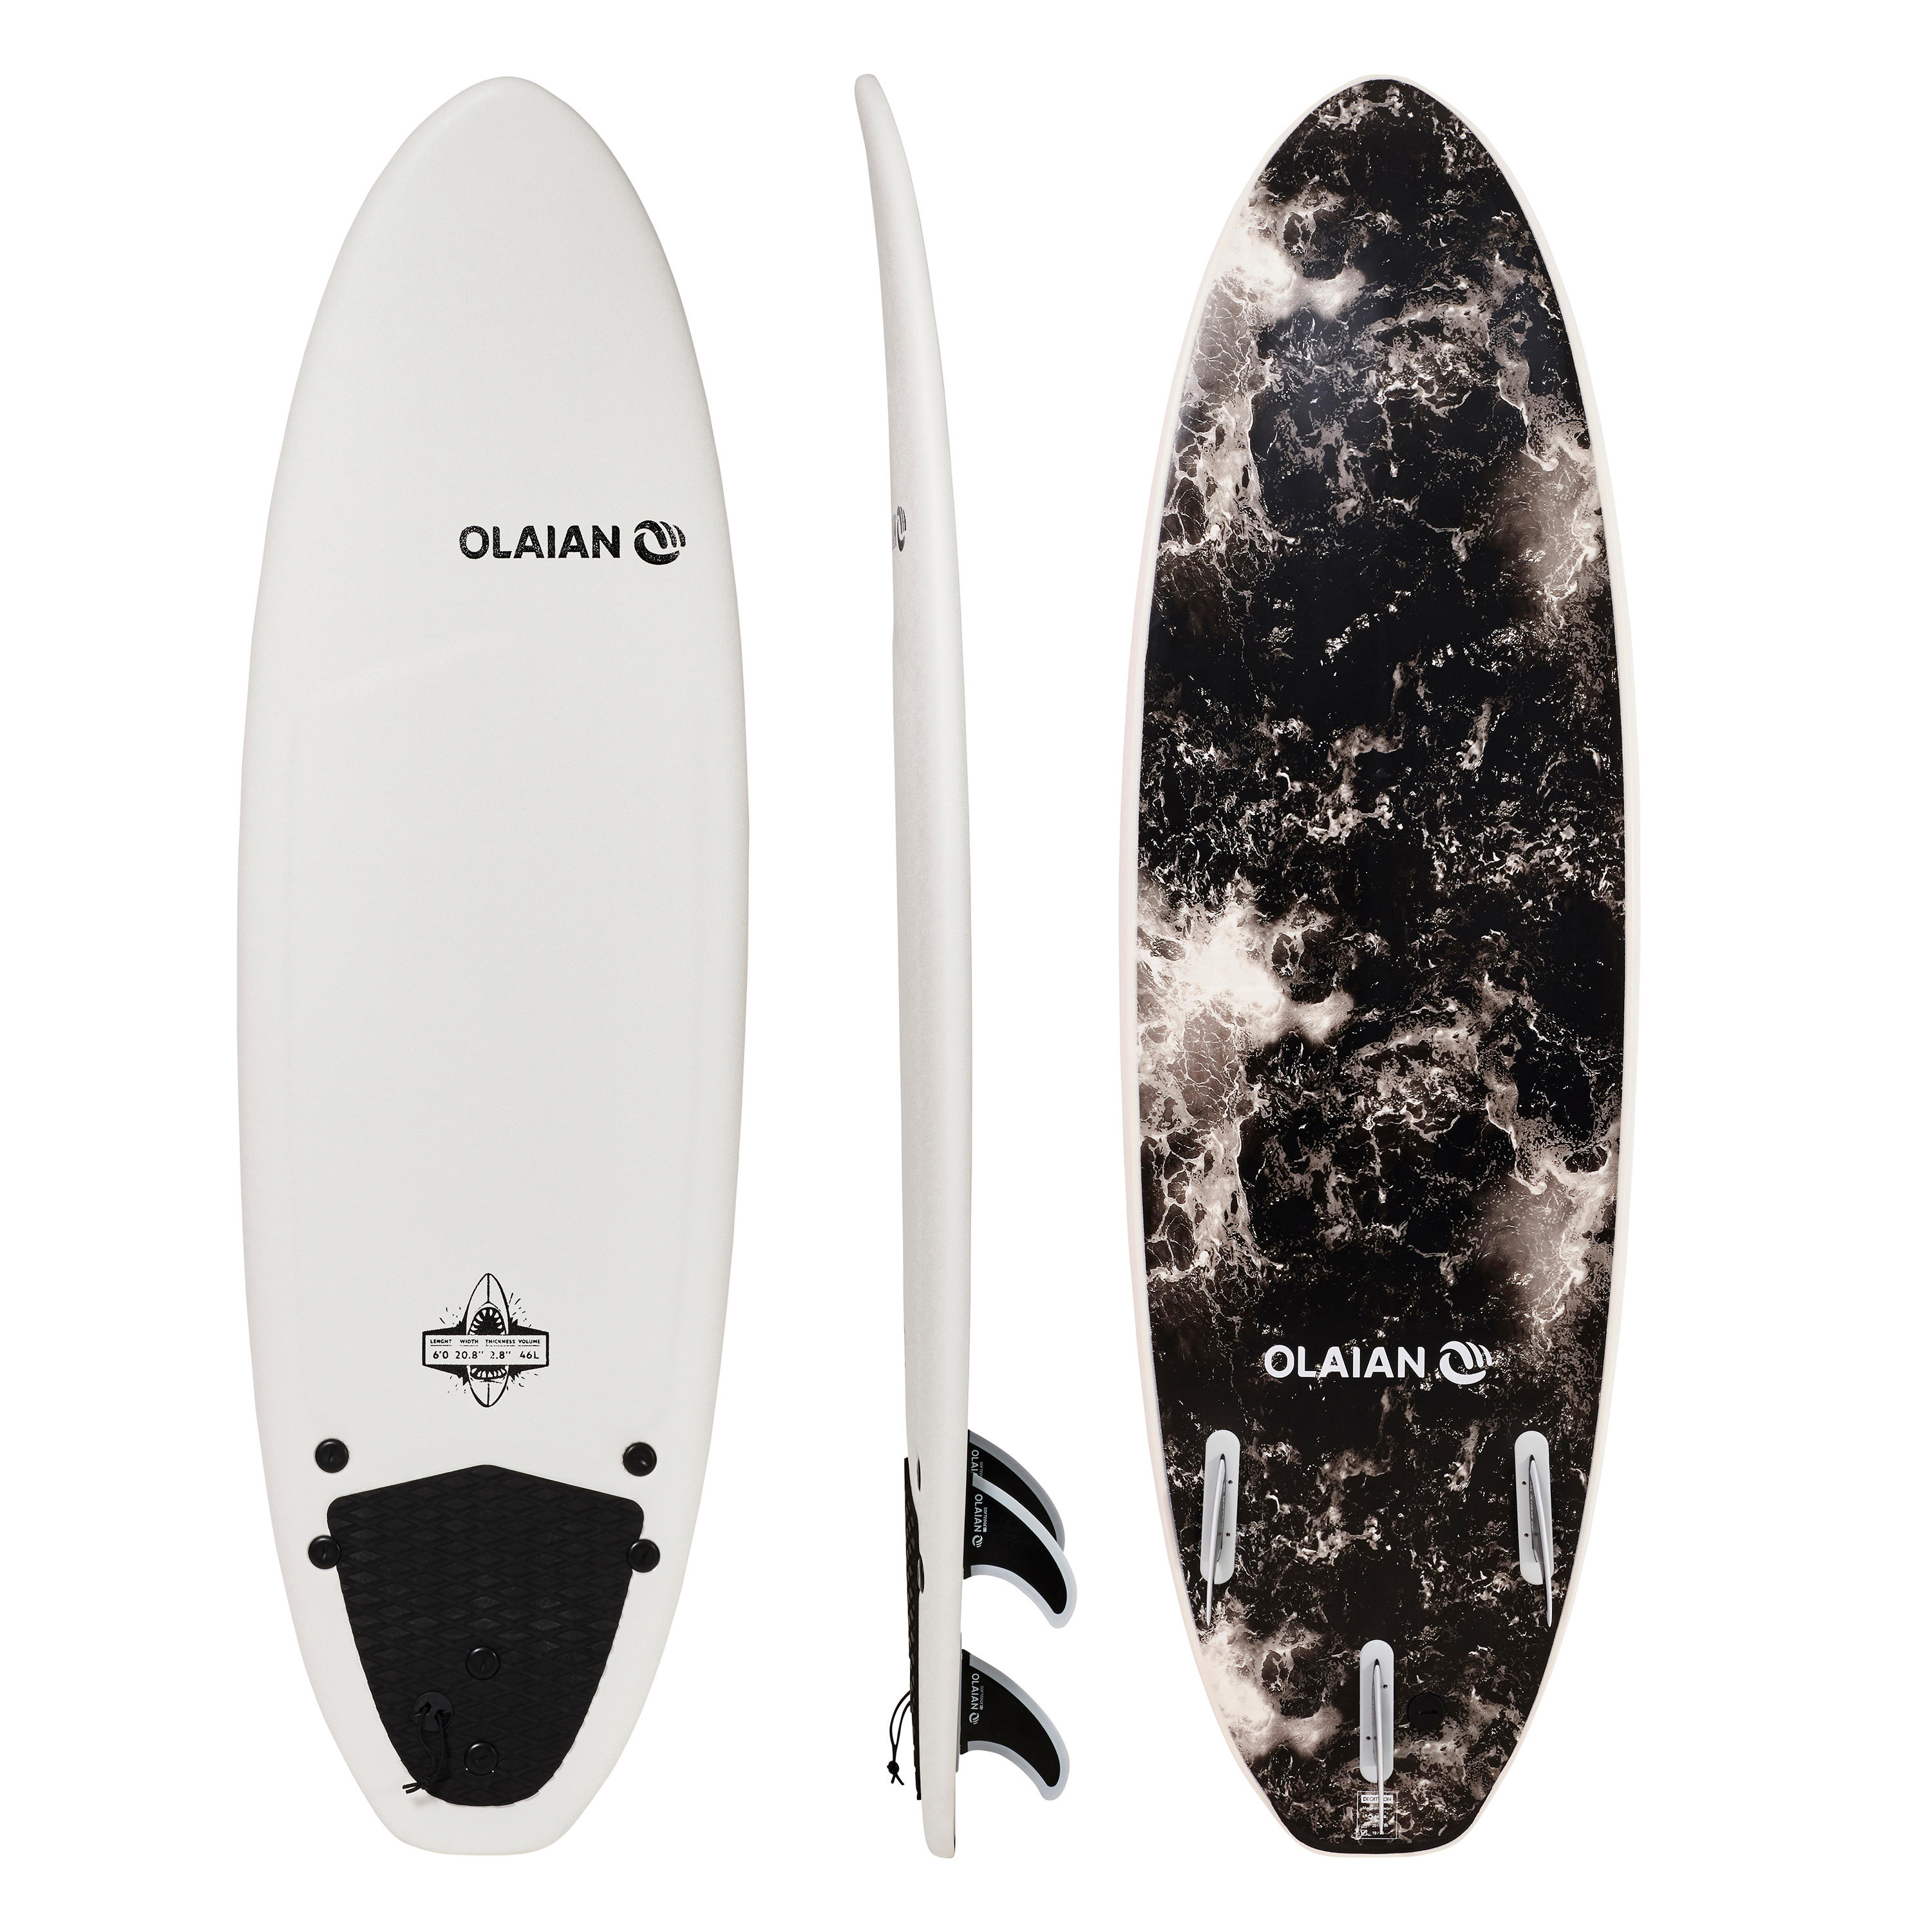 OLAIAN Surfboard 900 Schaumstoff Soft 6' inkl. 3 Finnen EINHEITSGRÖSSE